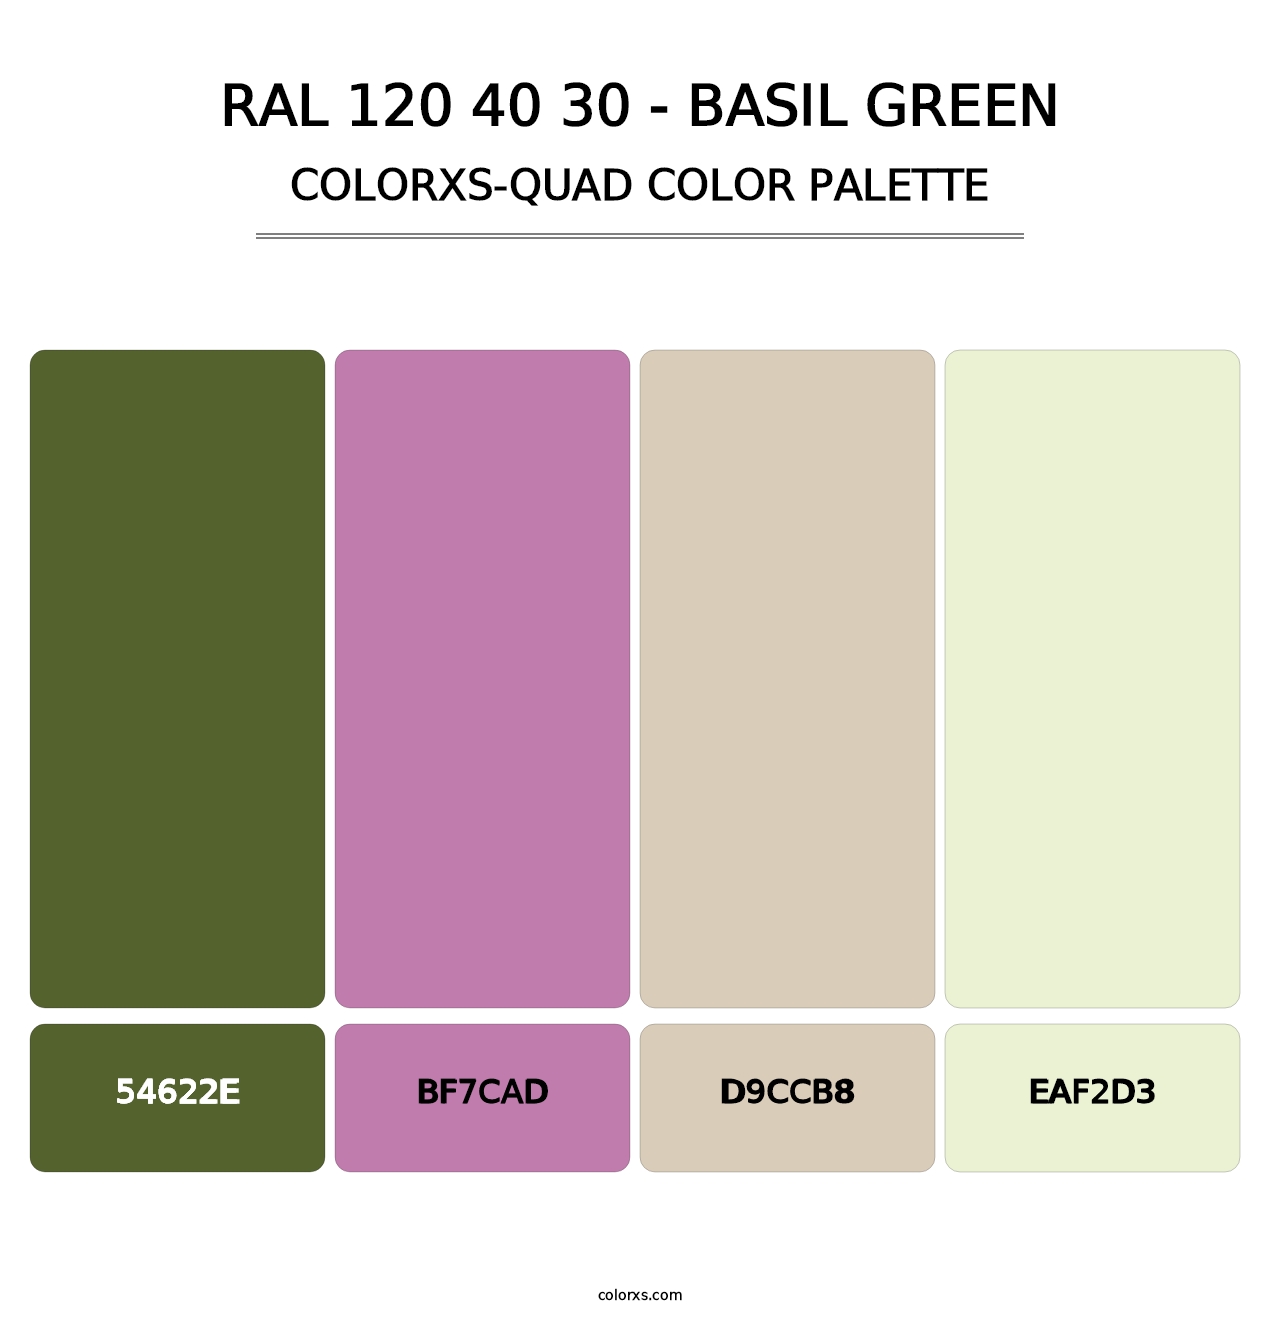 RAL 120 40 30 - Basil Green - Colorxs Quad Palette